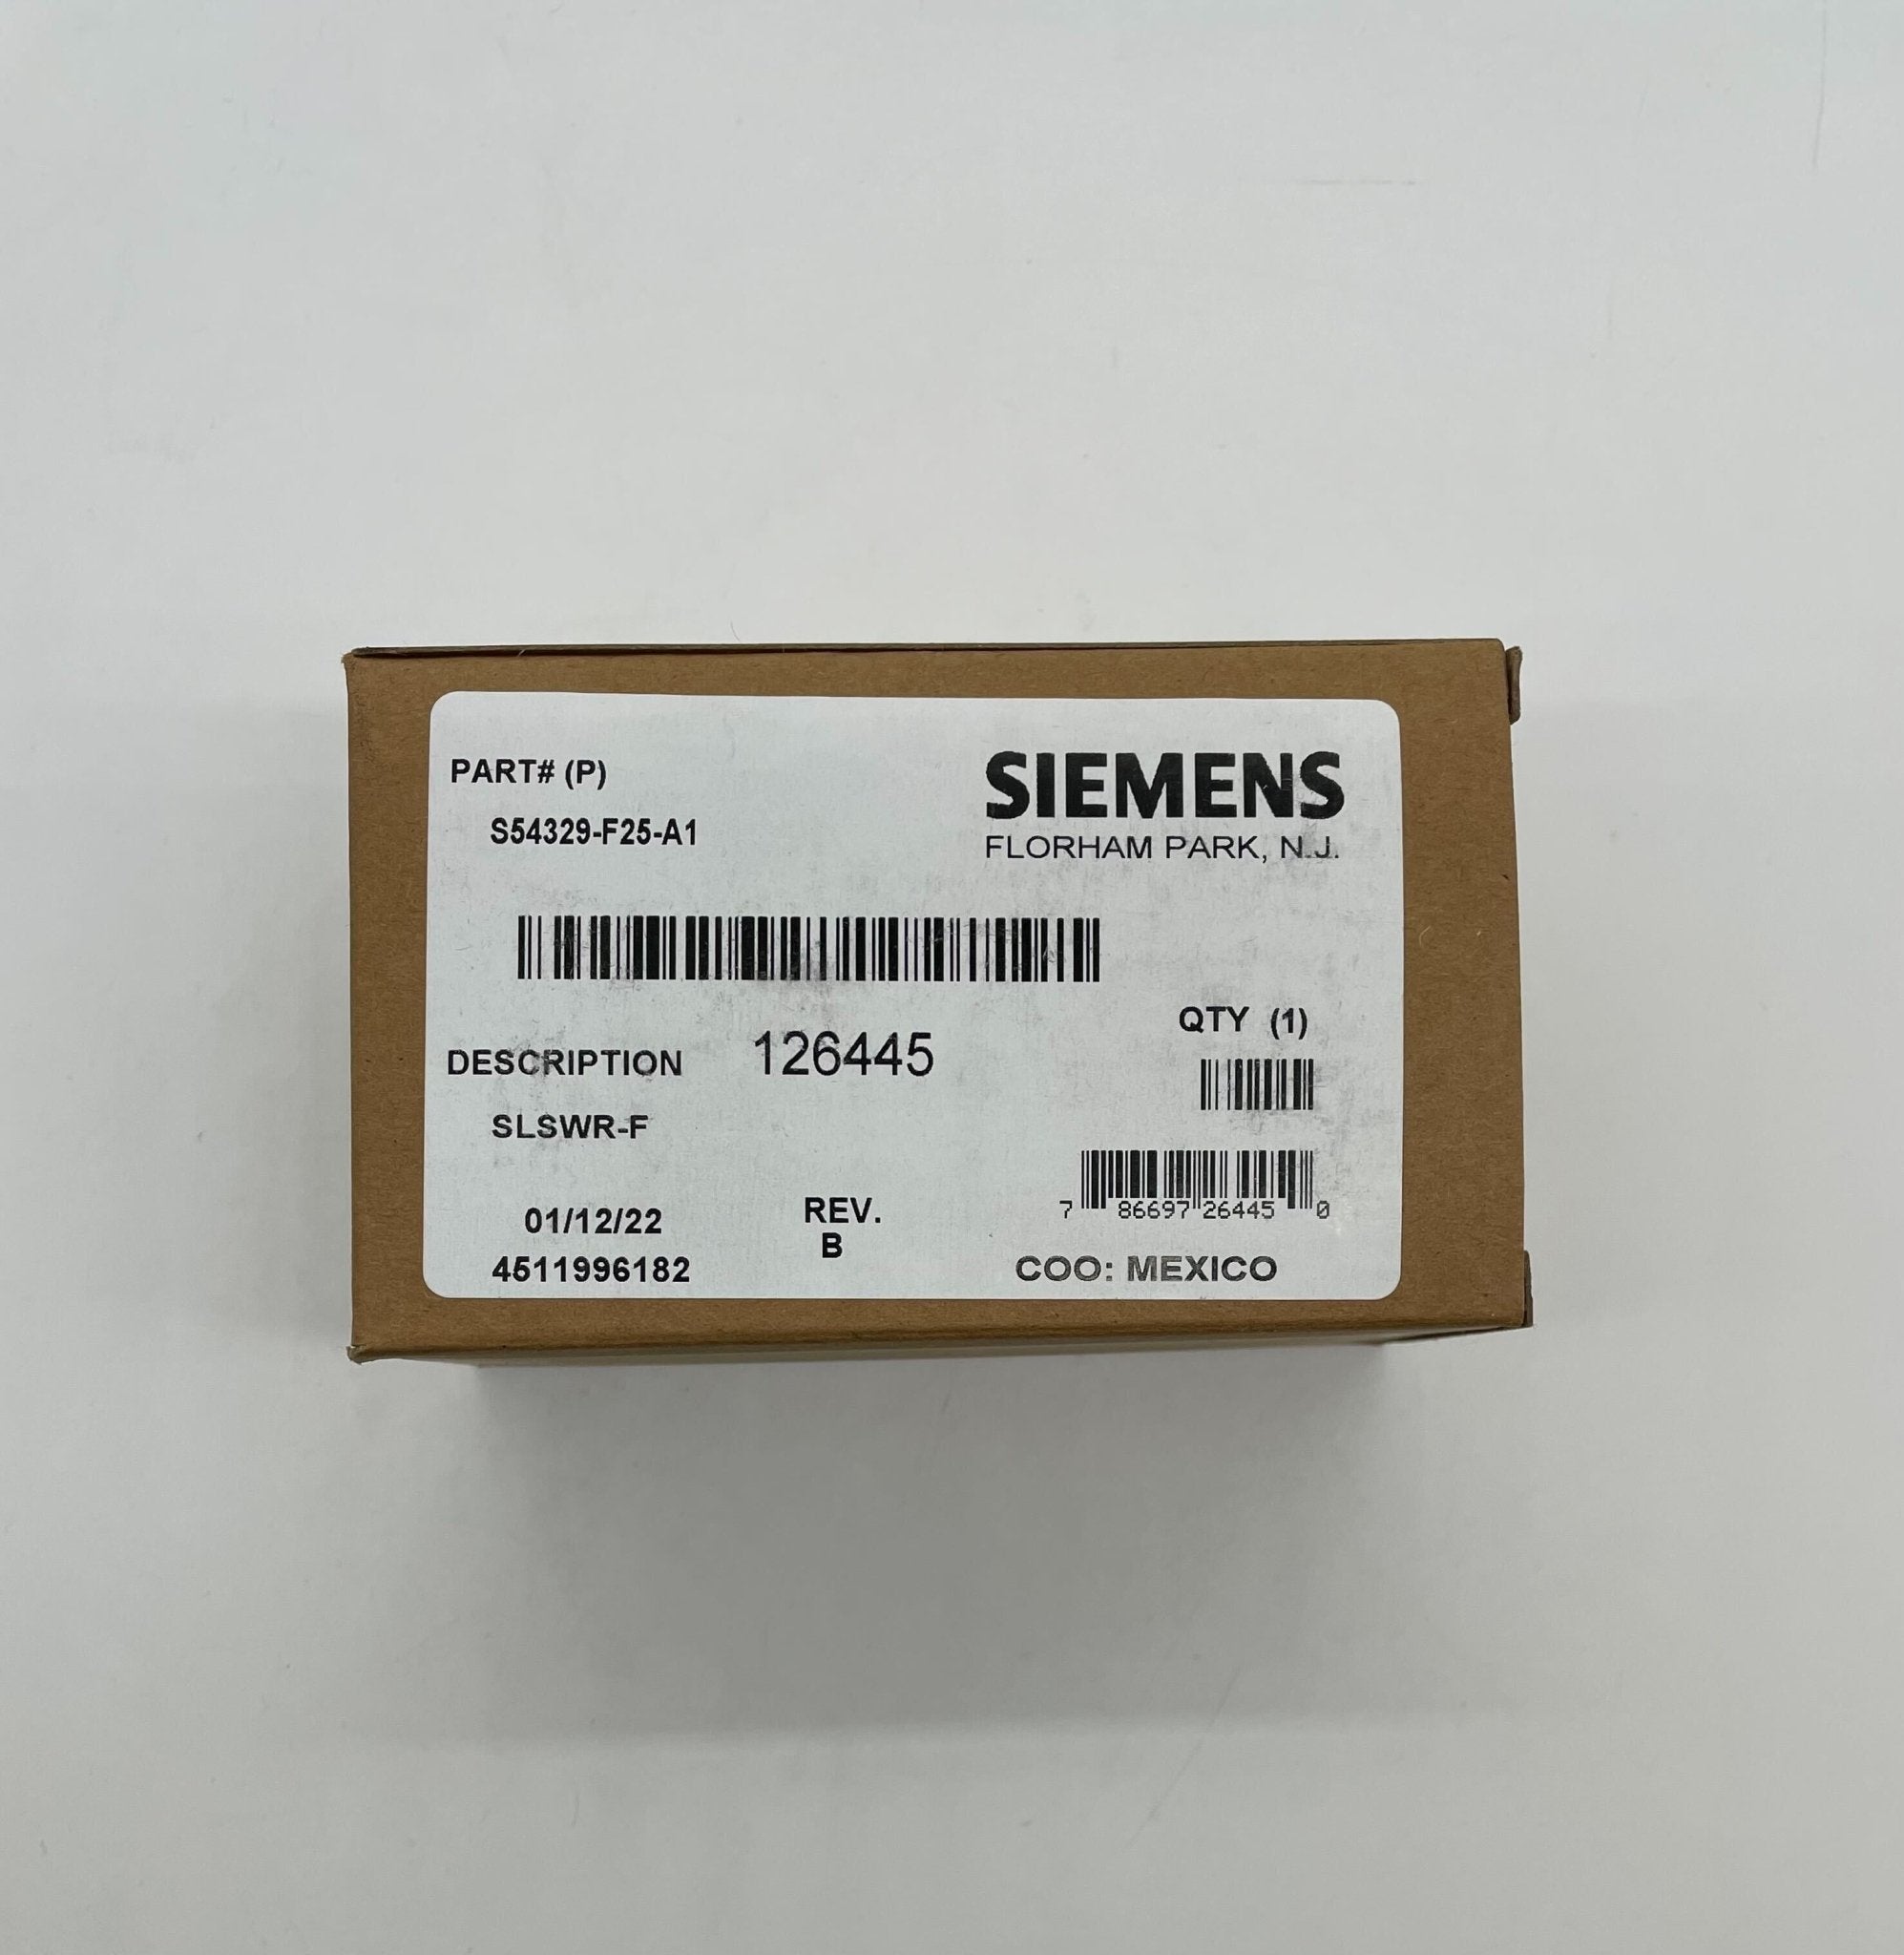 Siemens SLSWR-F - The Fire Alarm Supplier